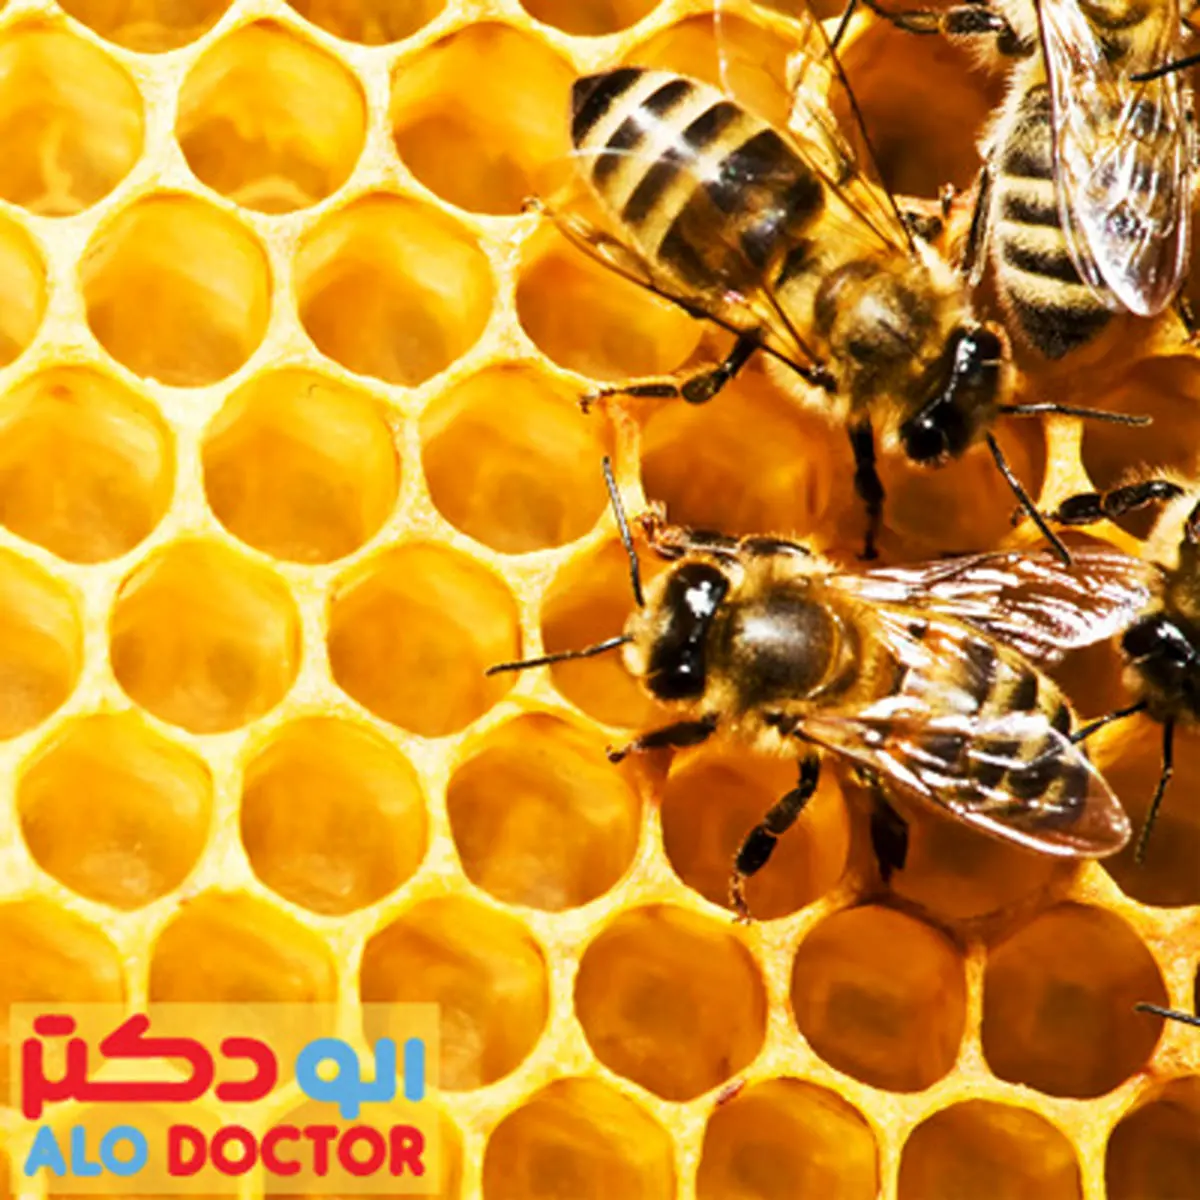 روش تشخیص سریع عسل اصل از تقلبی! +تصویر